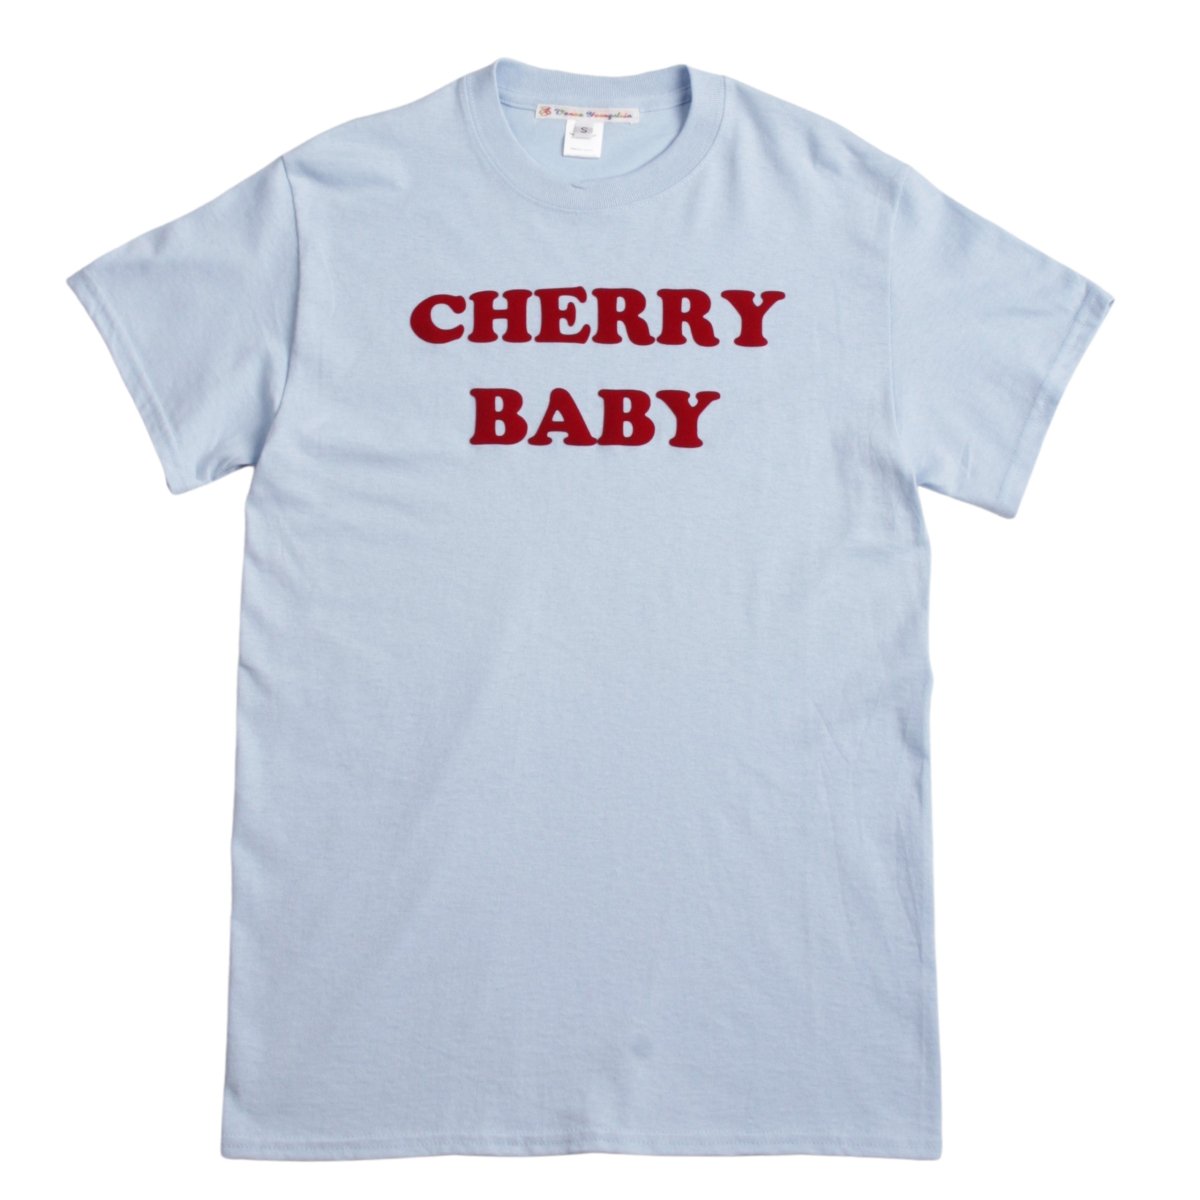 Cherry Baby Tee【Blue/Red】